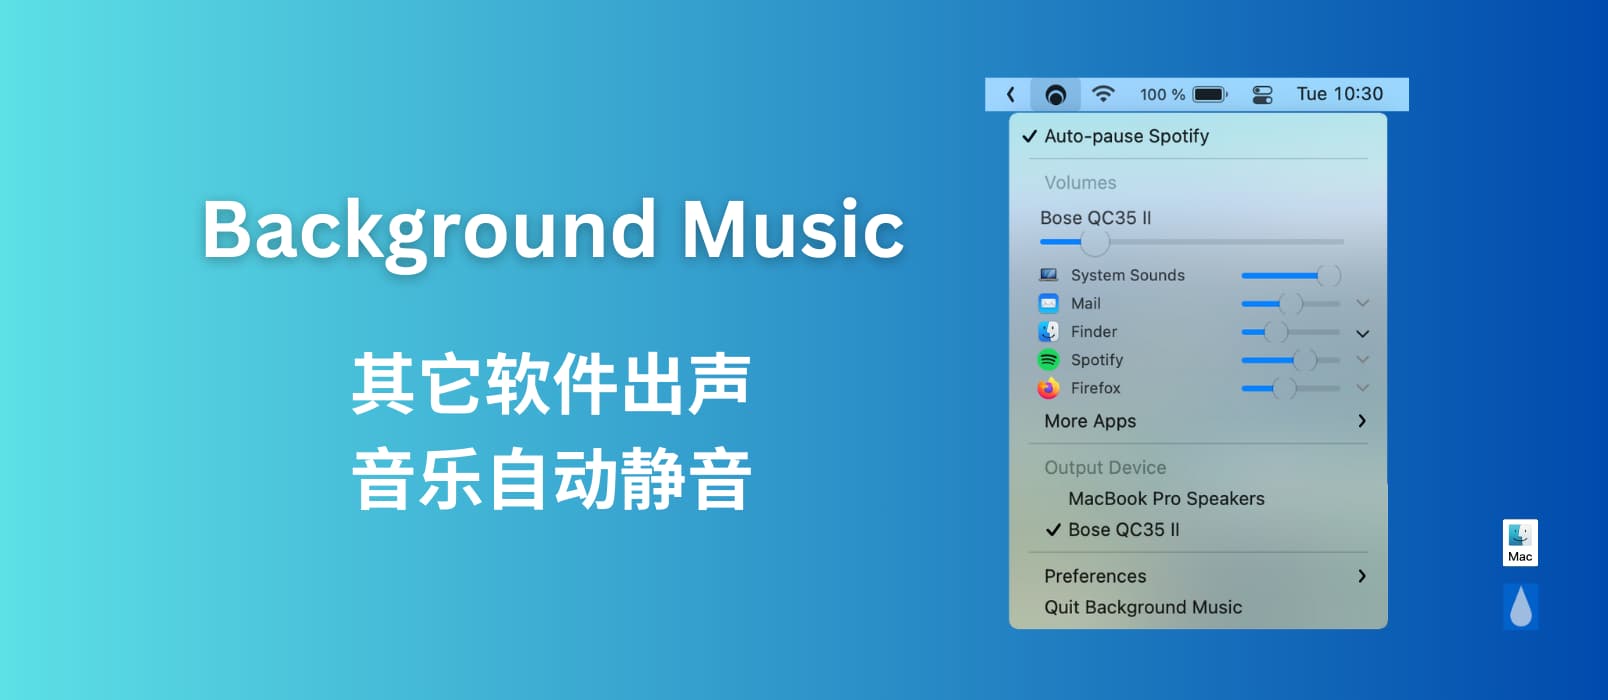 Background Music - 有其它声音时，自动暂停音乐[macOS]